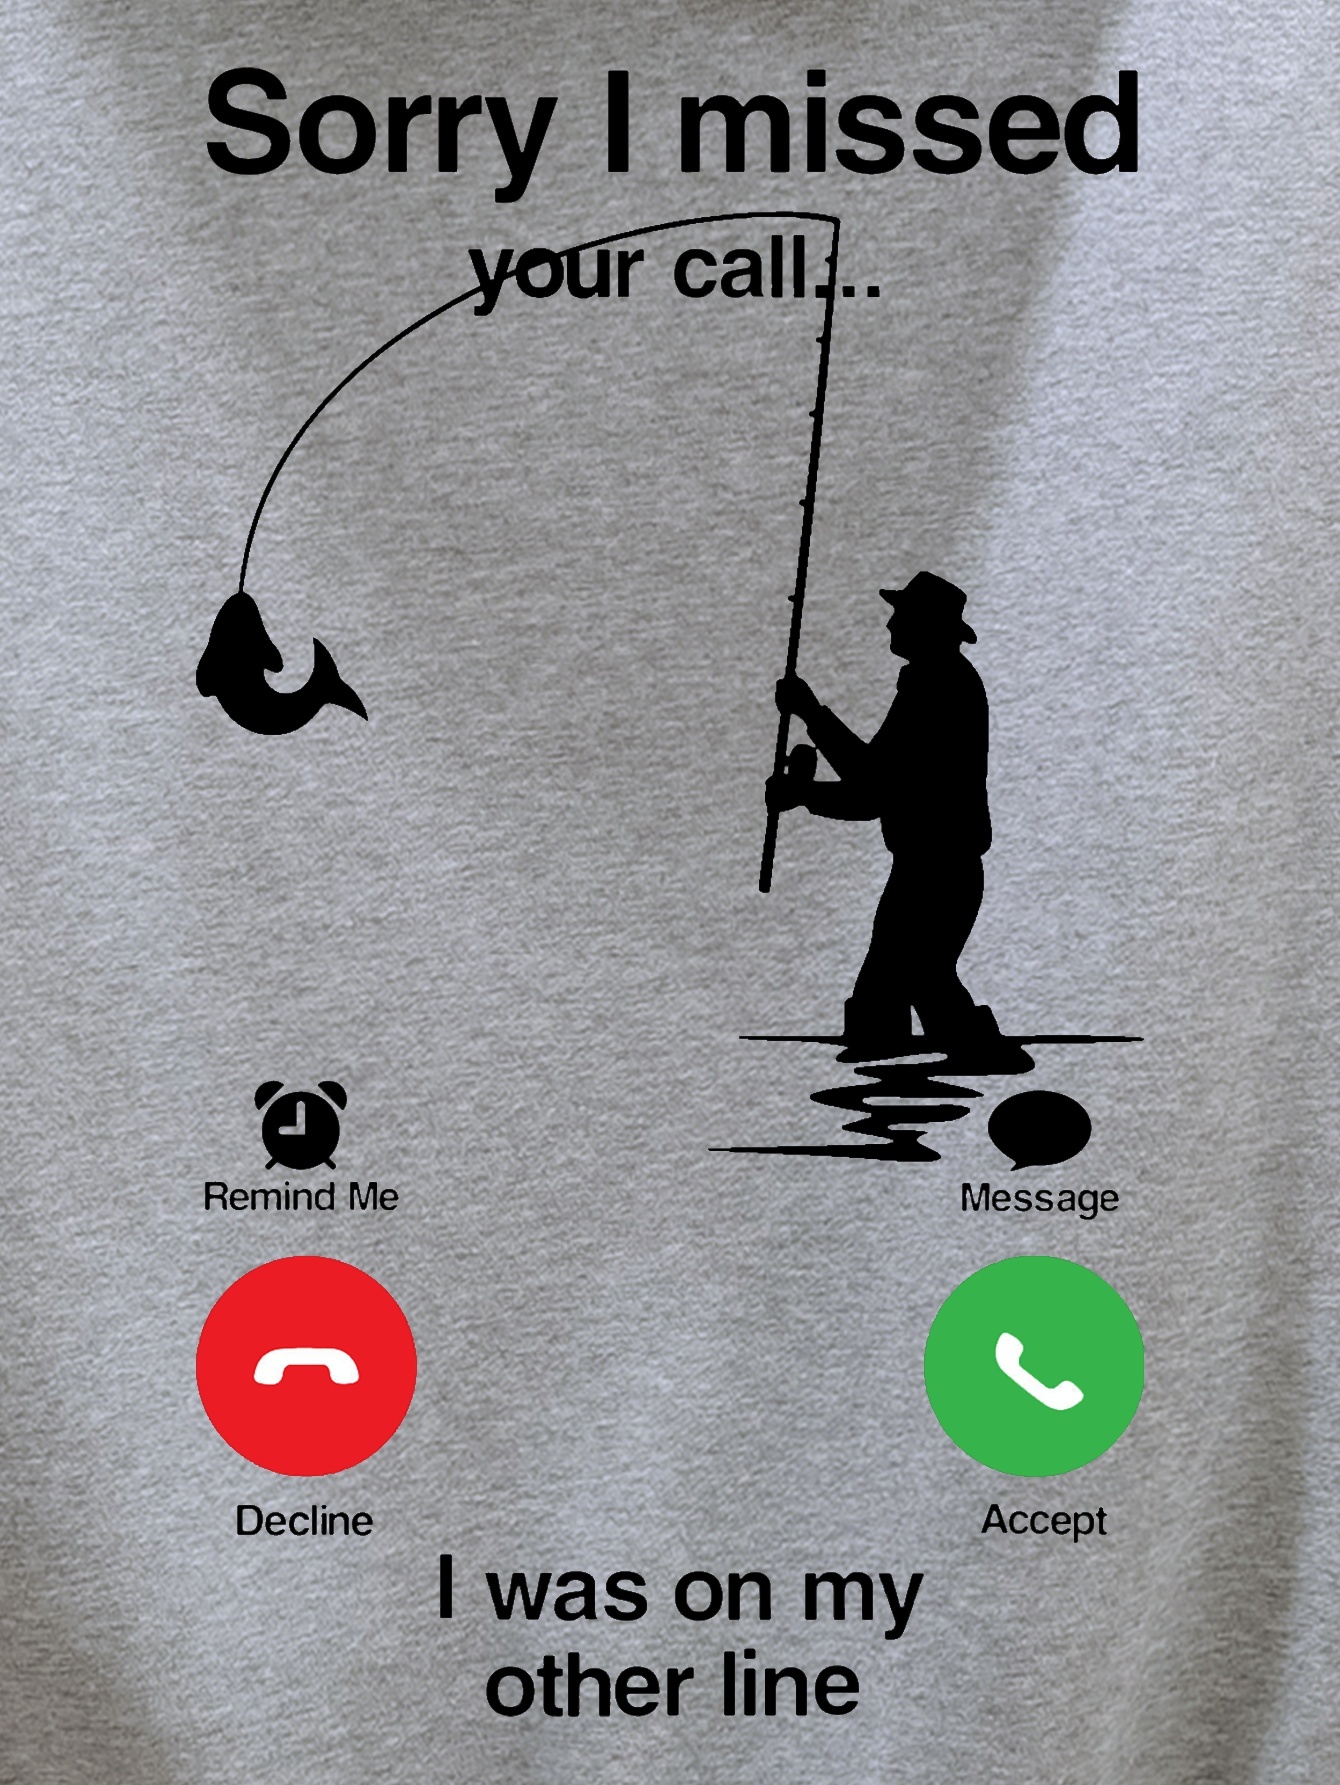 Cool Funny Fishing Meme T Shirt I Went Fishing Shirt For Men Gift